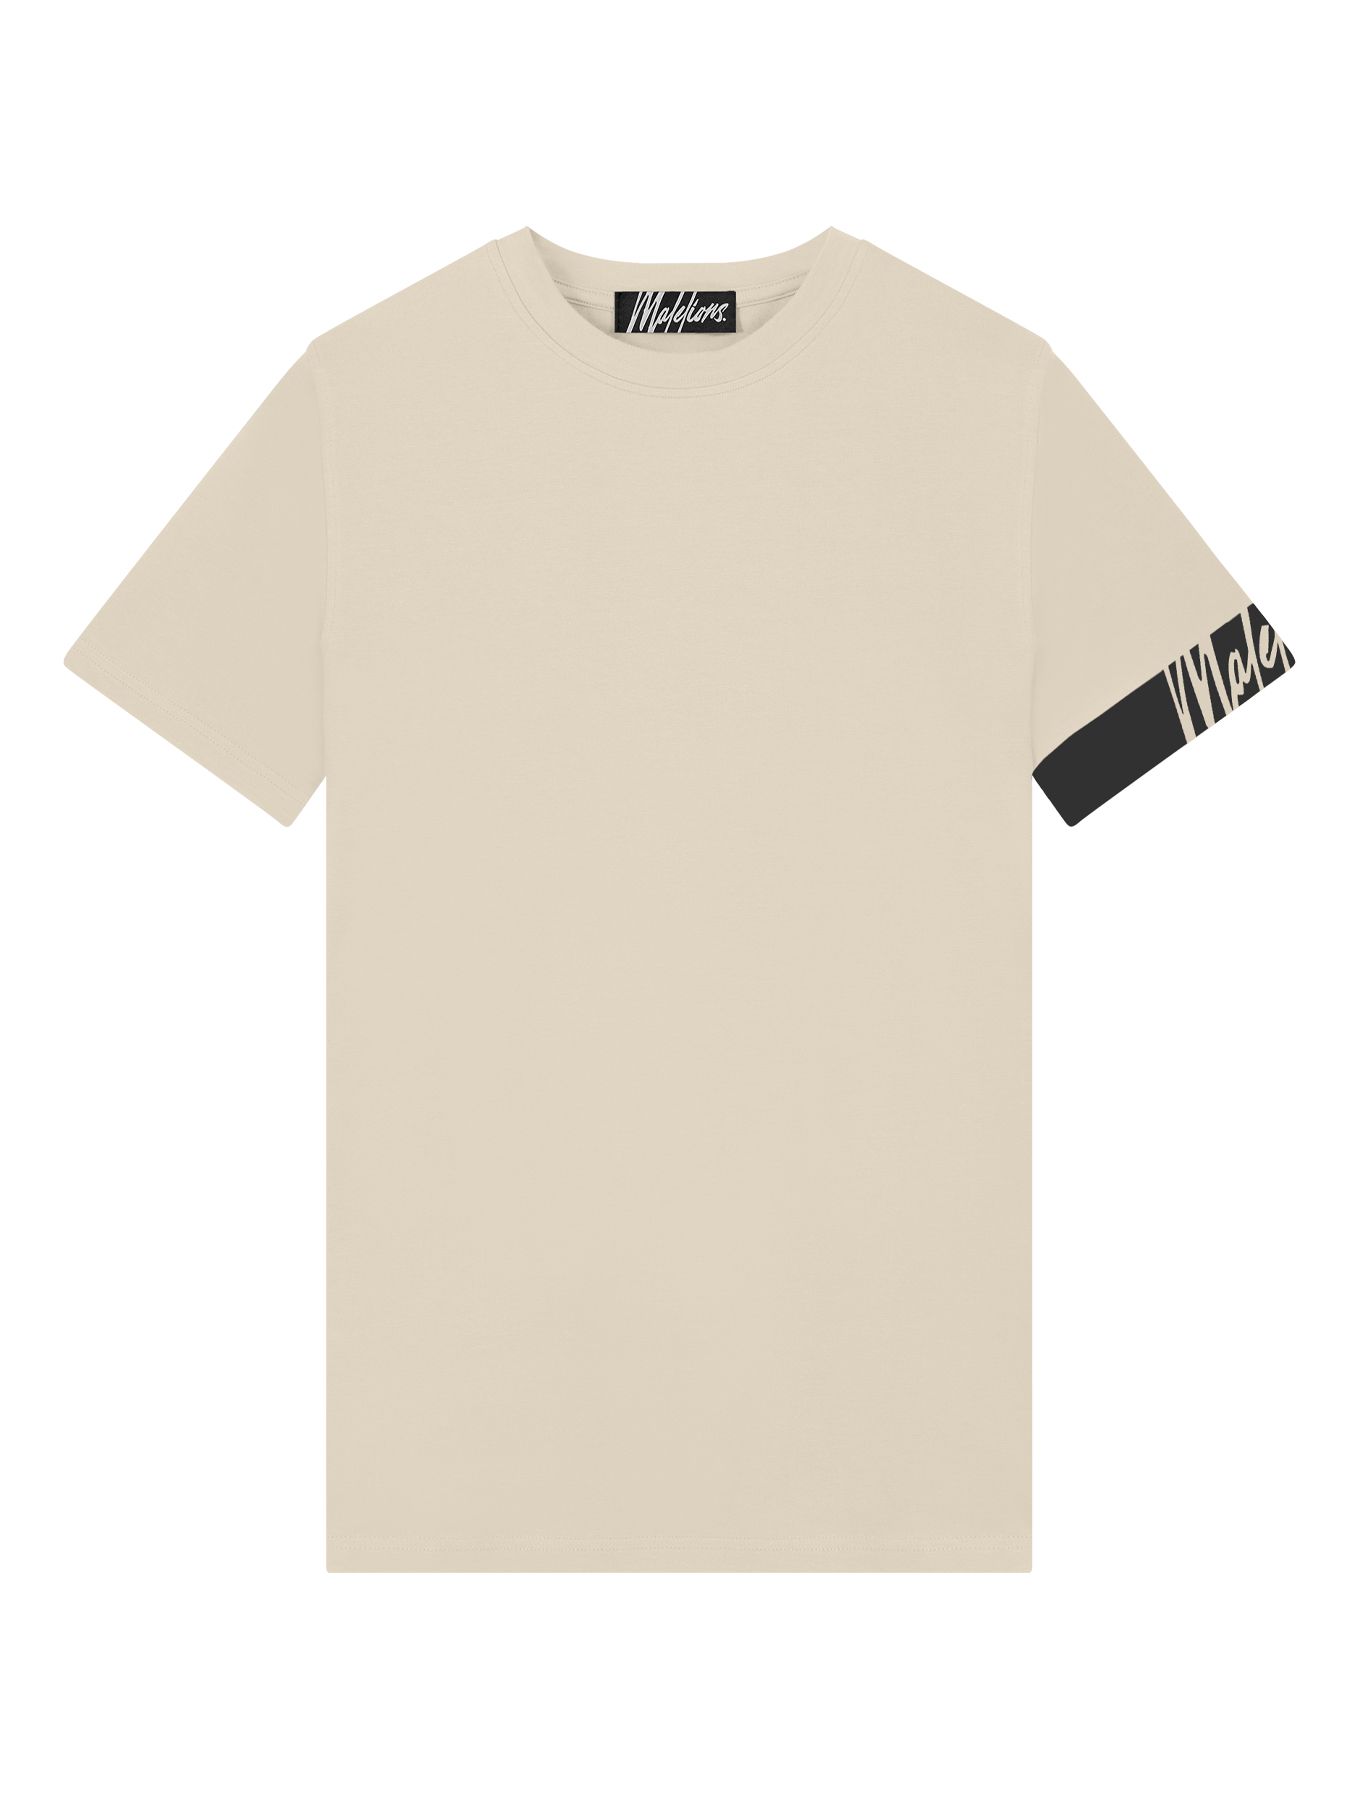 Malelions M3-ss23-25 T-shirt Beige/Black 00103903-296